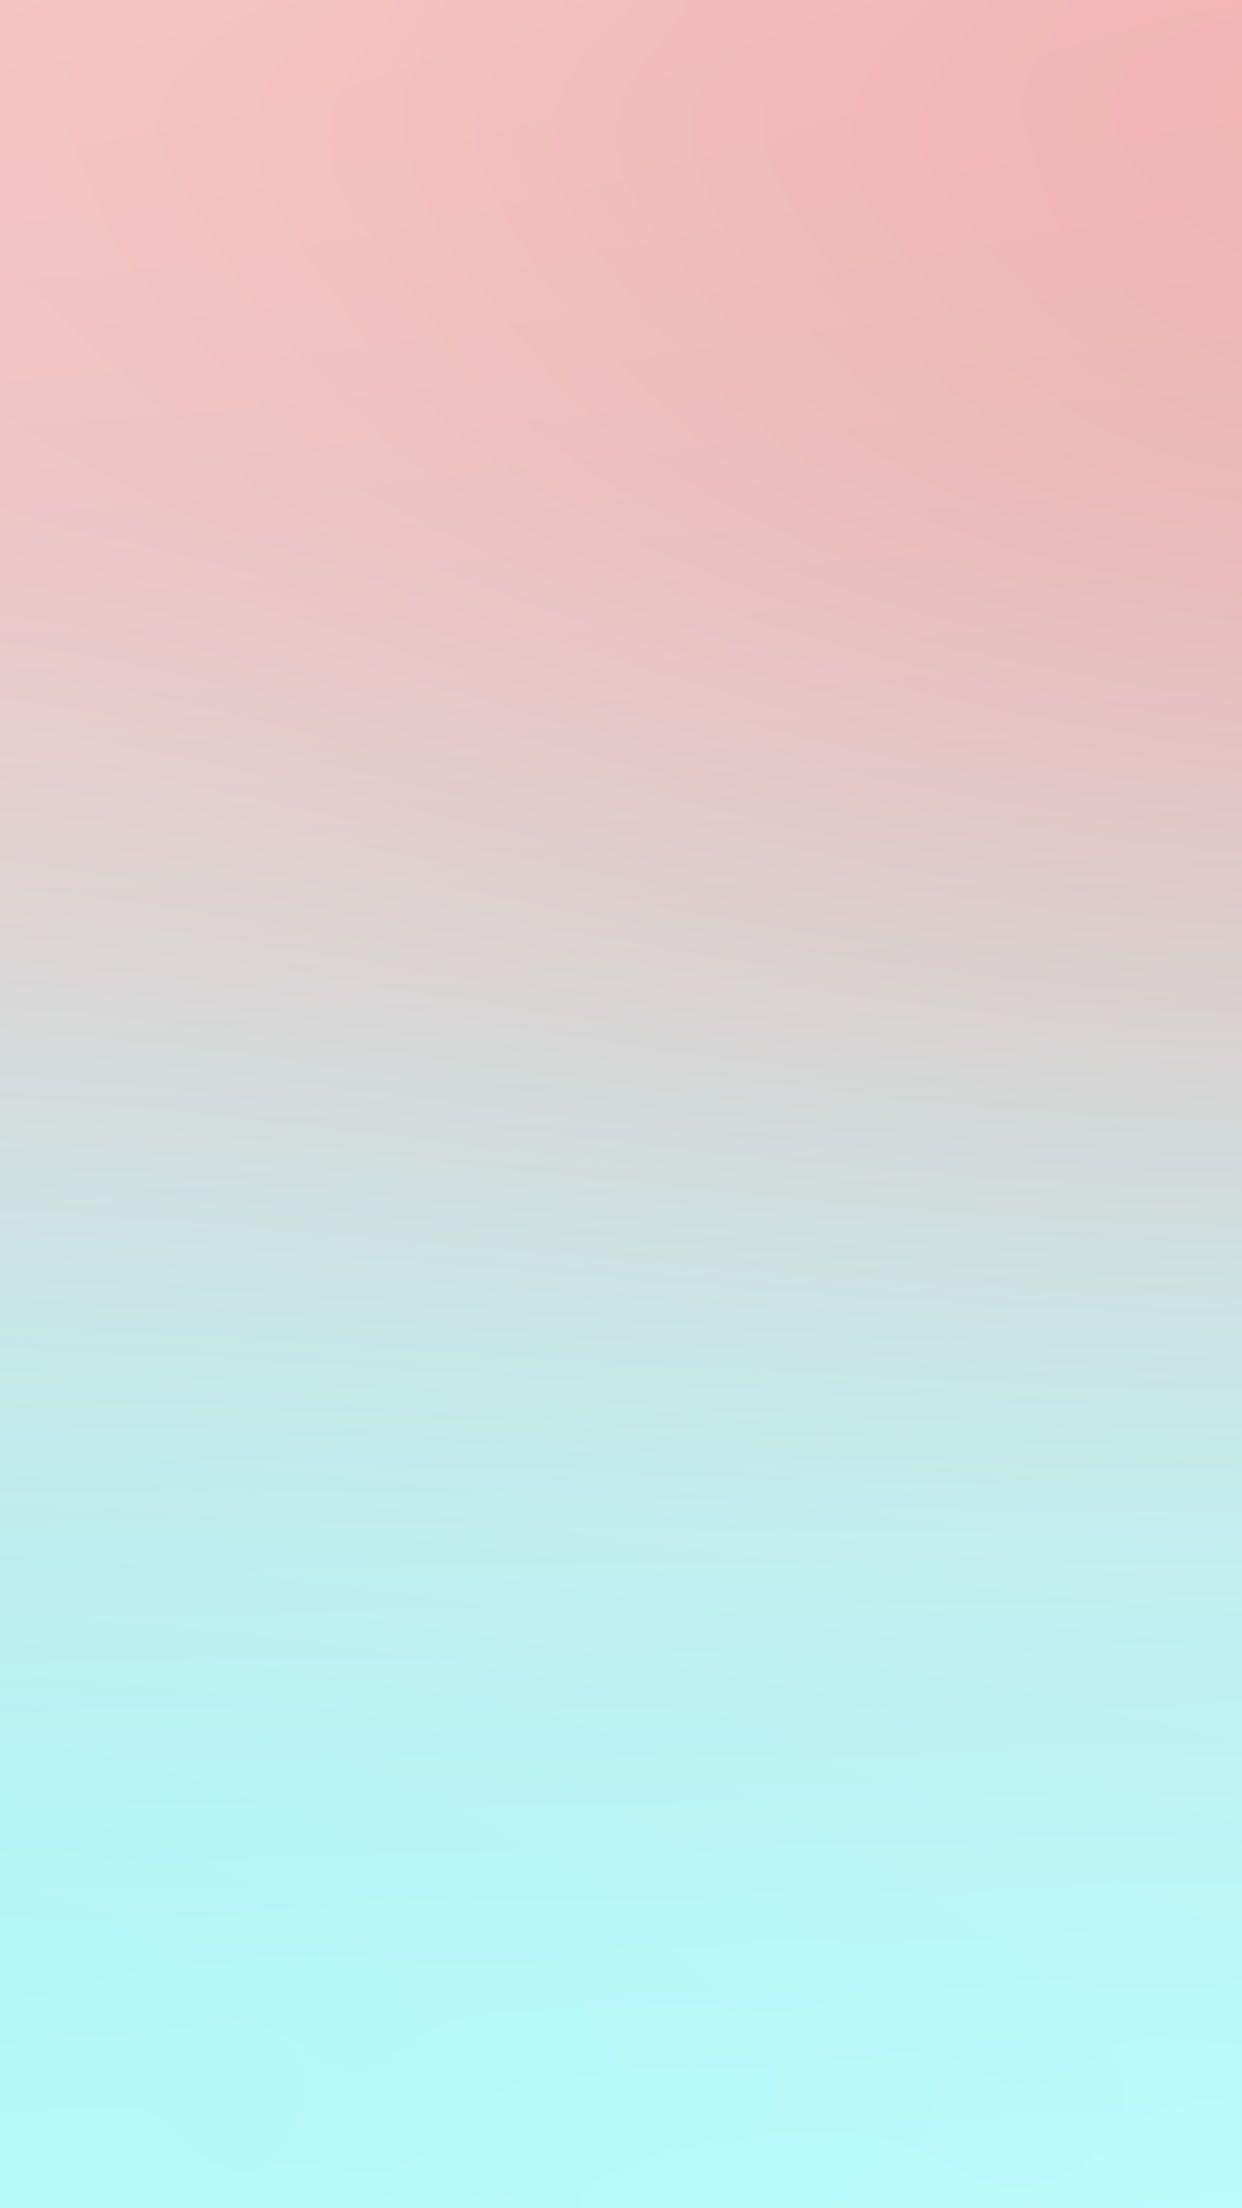 iPhone wallpaper. red blue soft pastel blur